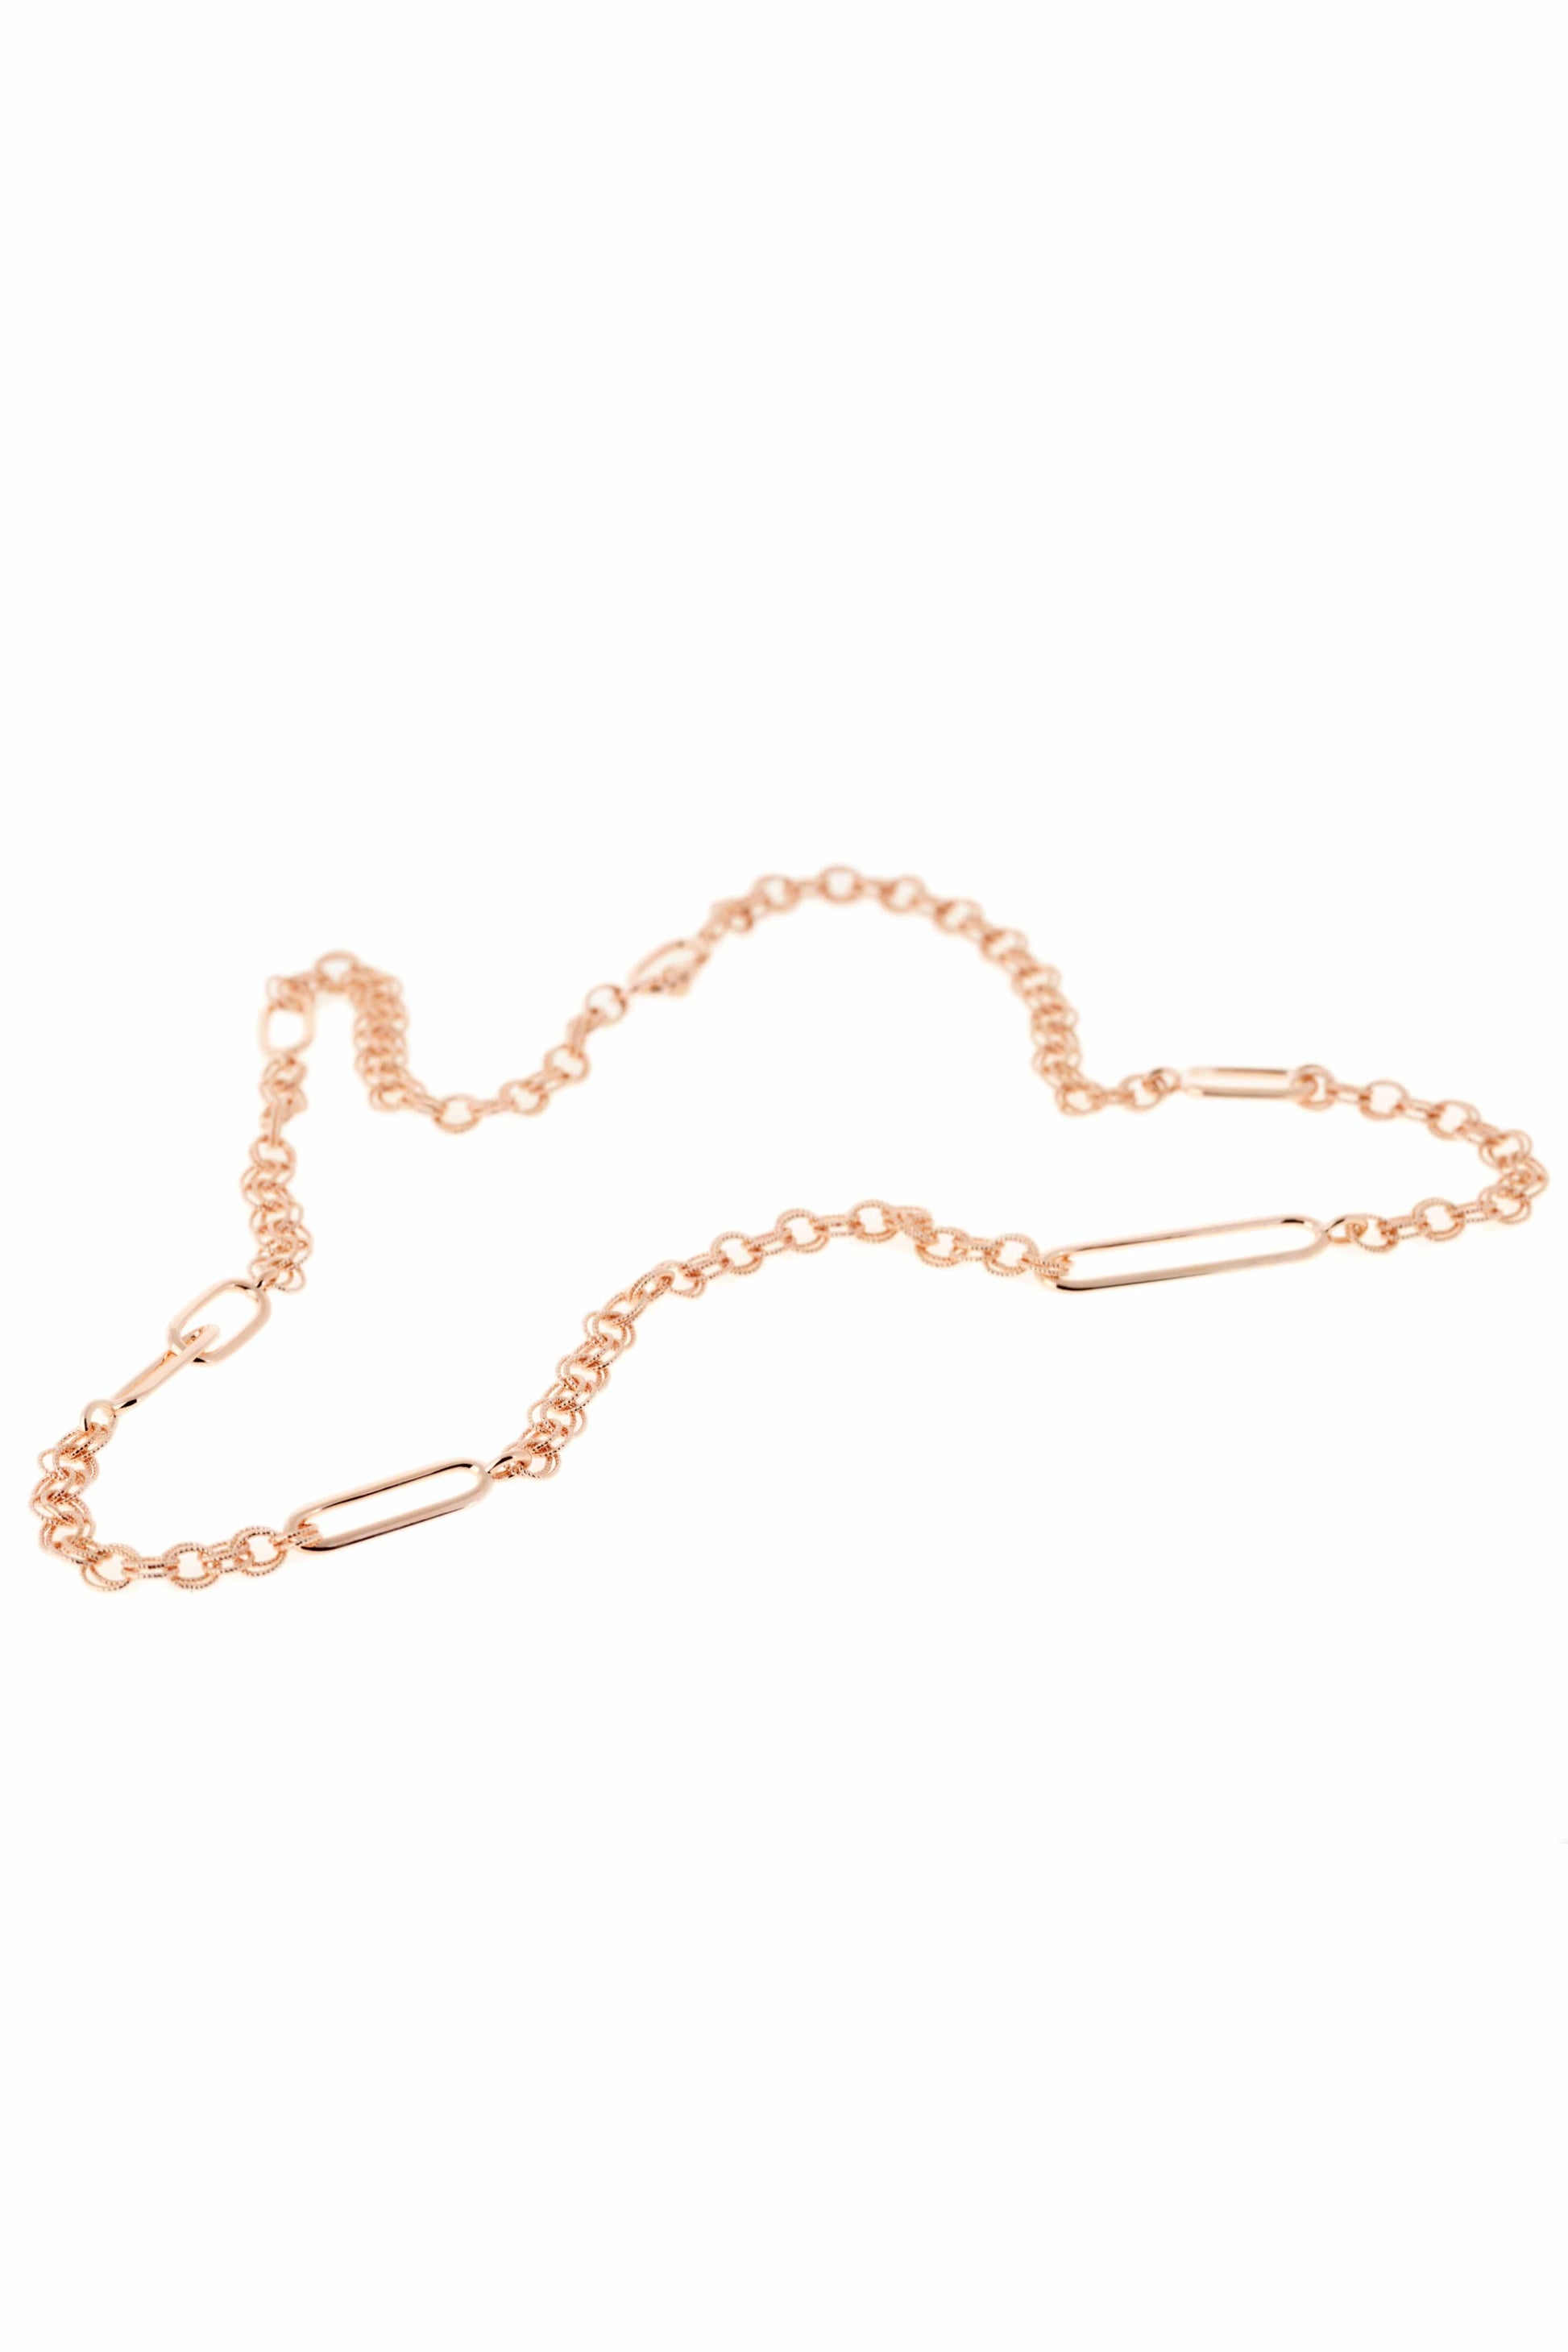 SELIM MOUZANNAR-Torsadee Double Chain Necklace-ROSE GOLD